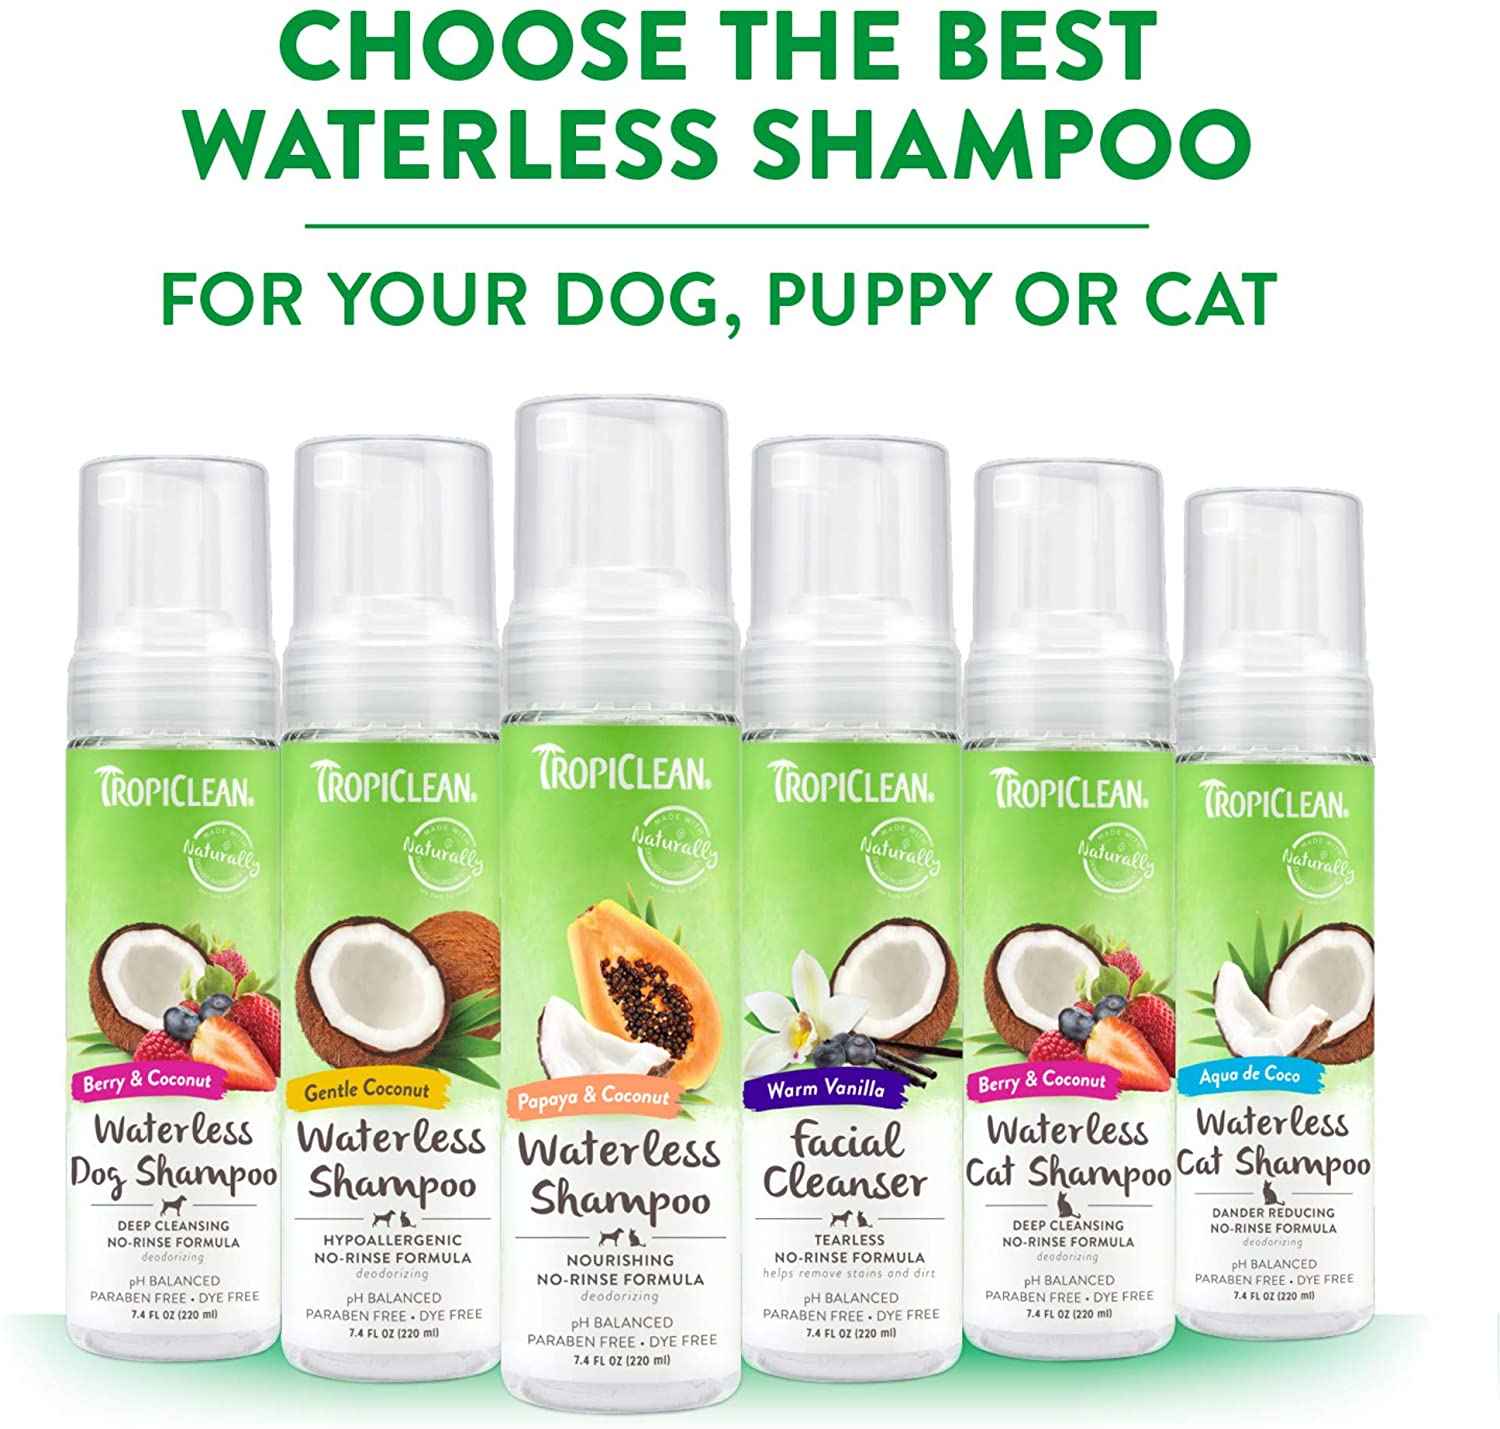 TropiClean Waterless Pet Shampoo